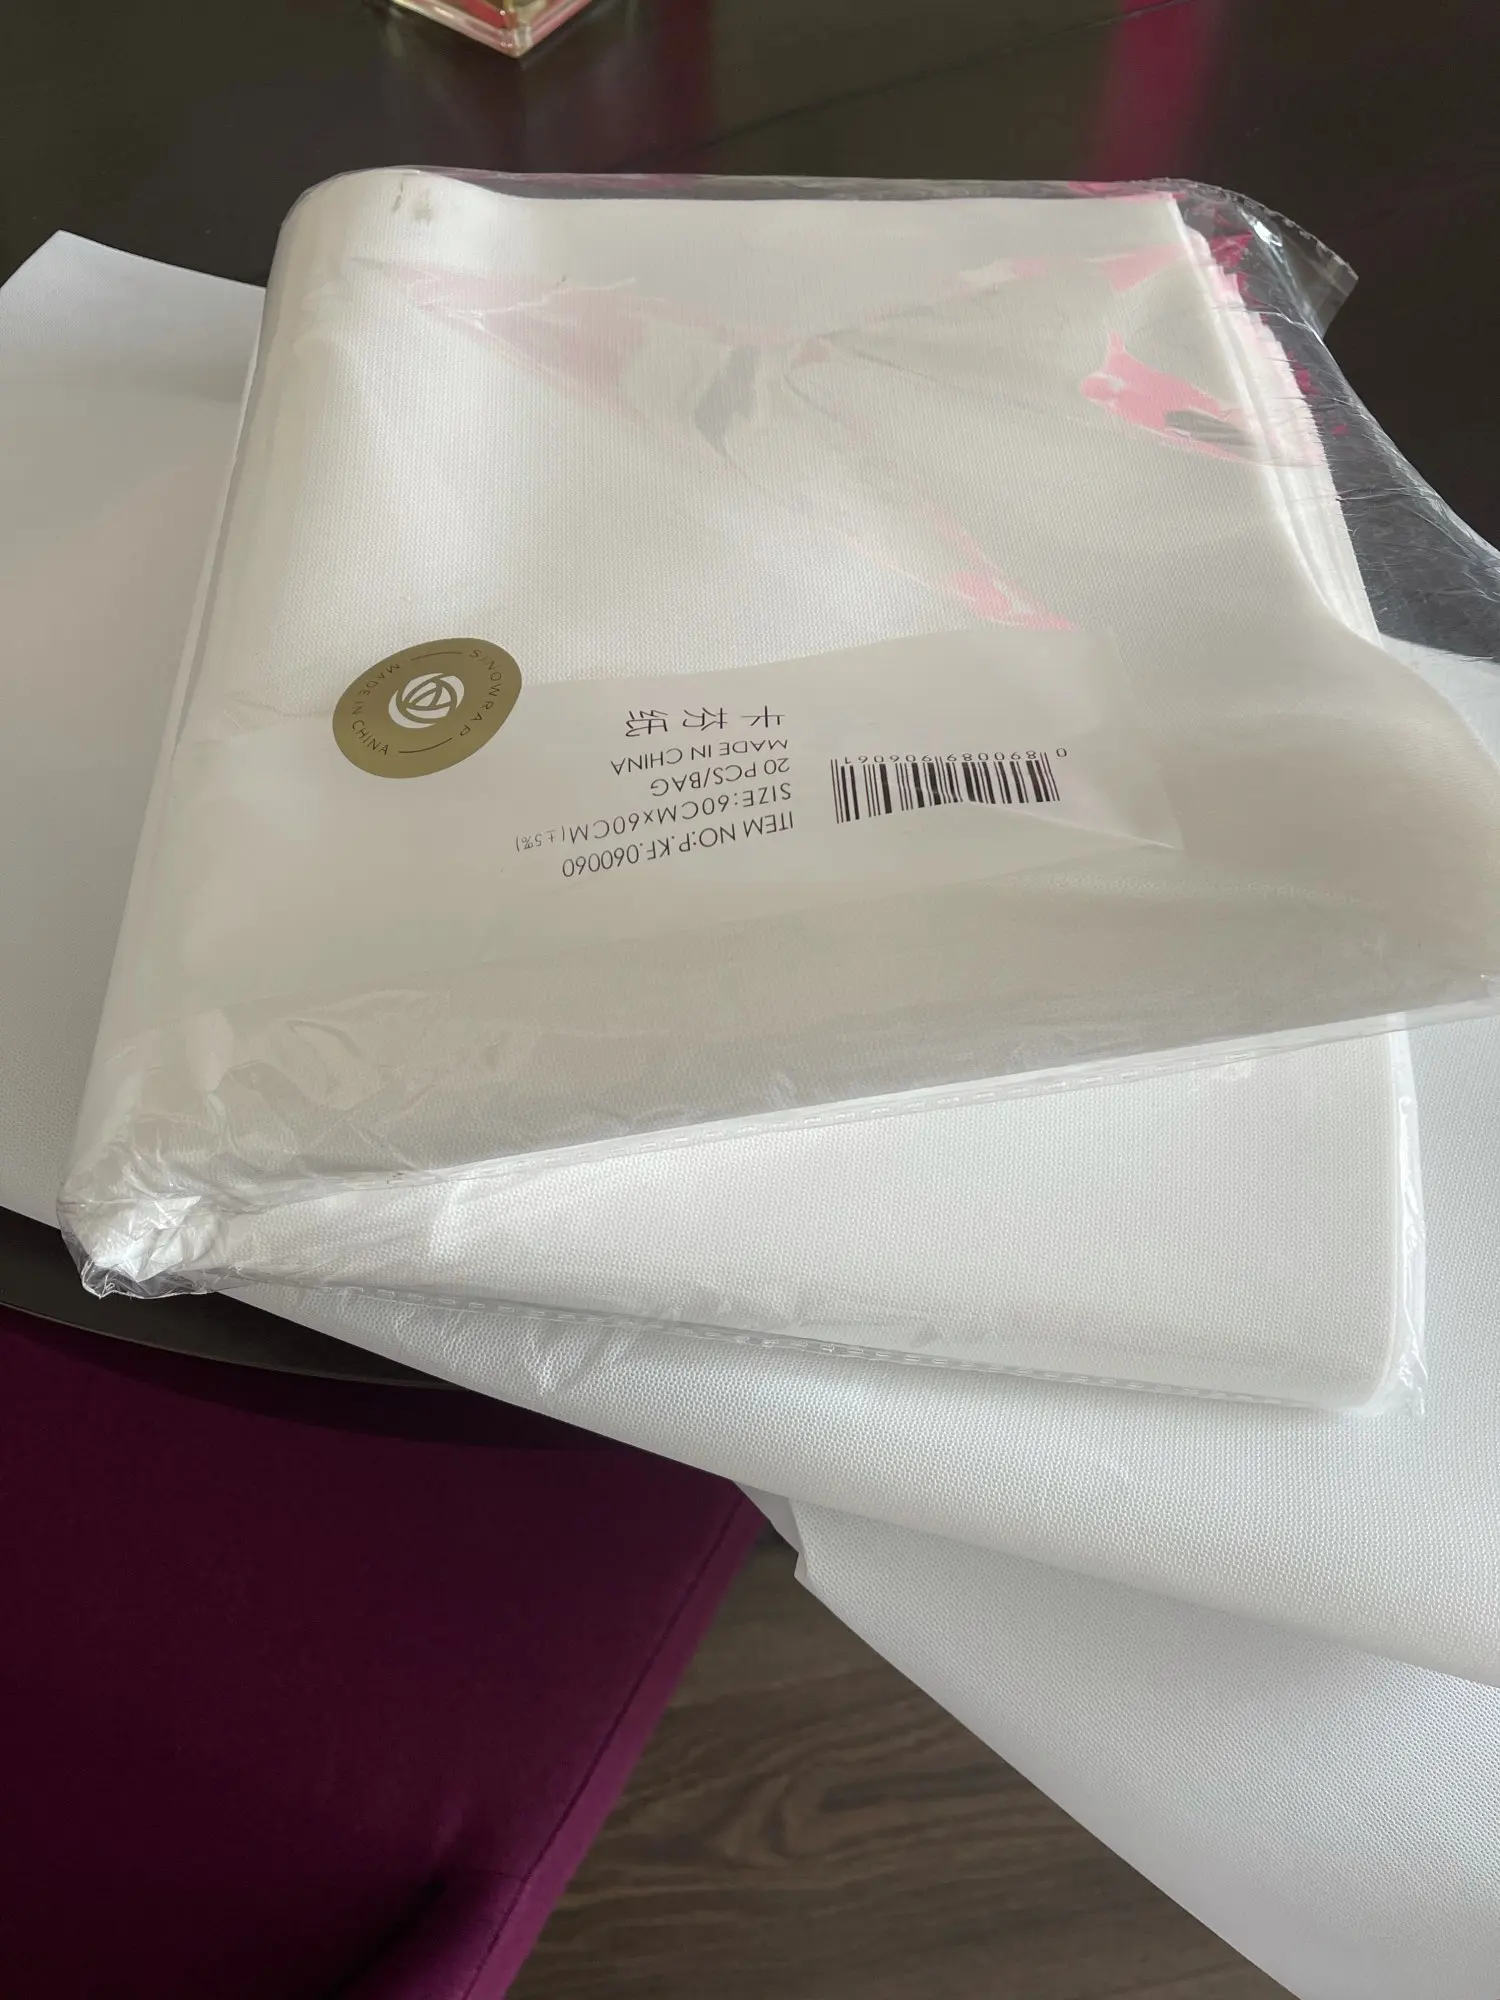 20pcs/bag Korean Rose Bouquet Wrapping Paper Monochrome Waterproof